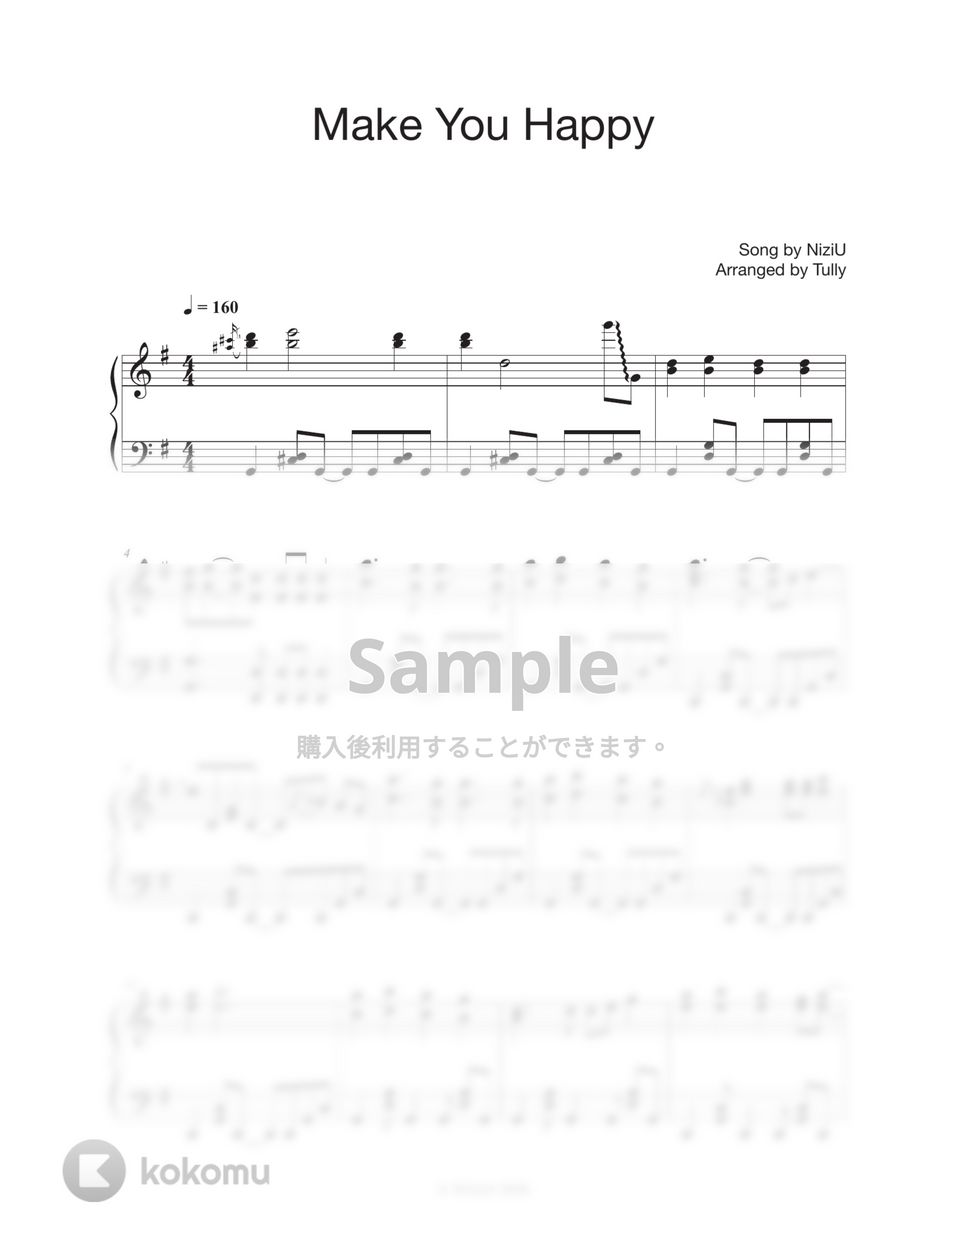 NiziU - Make you happy by Tully Piano